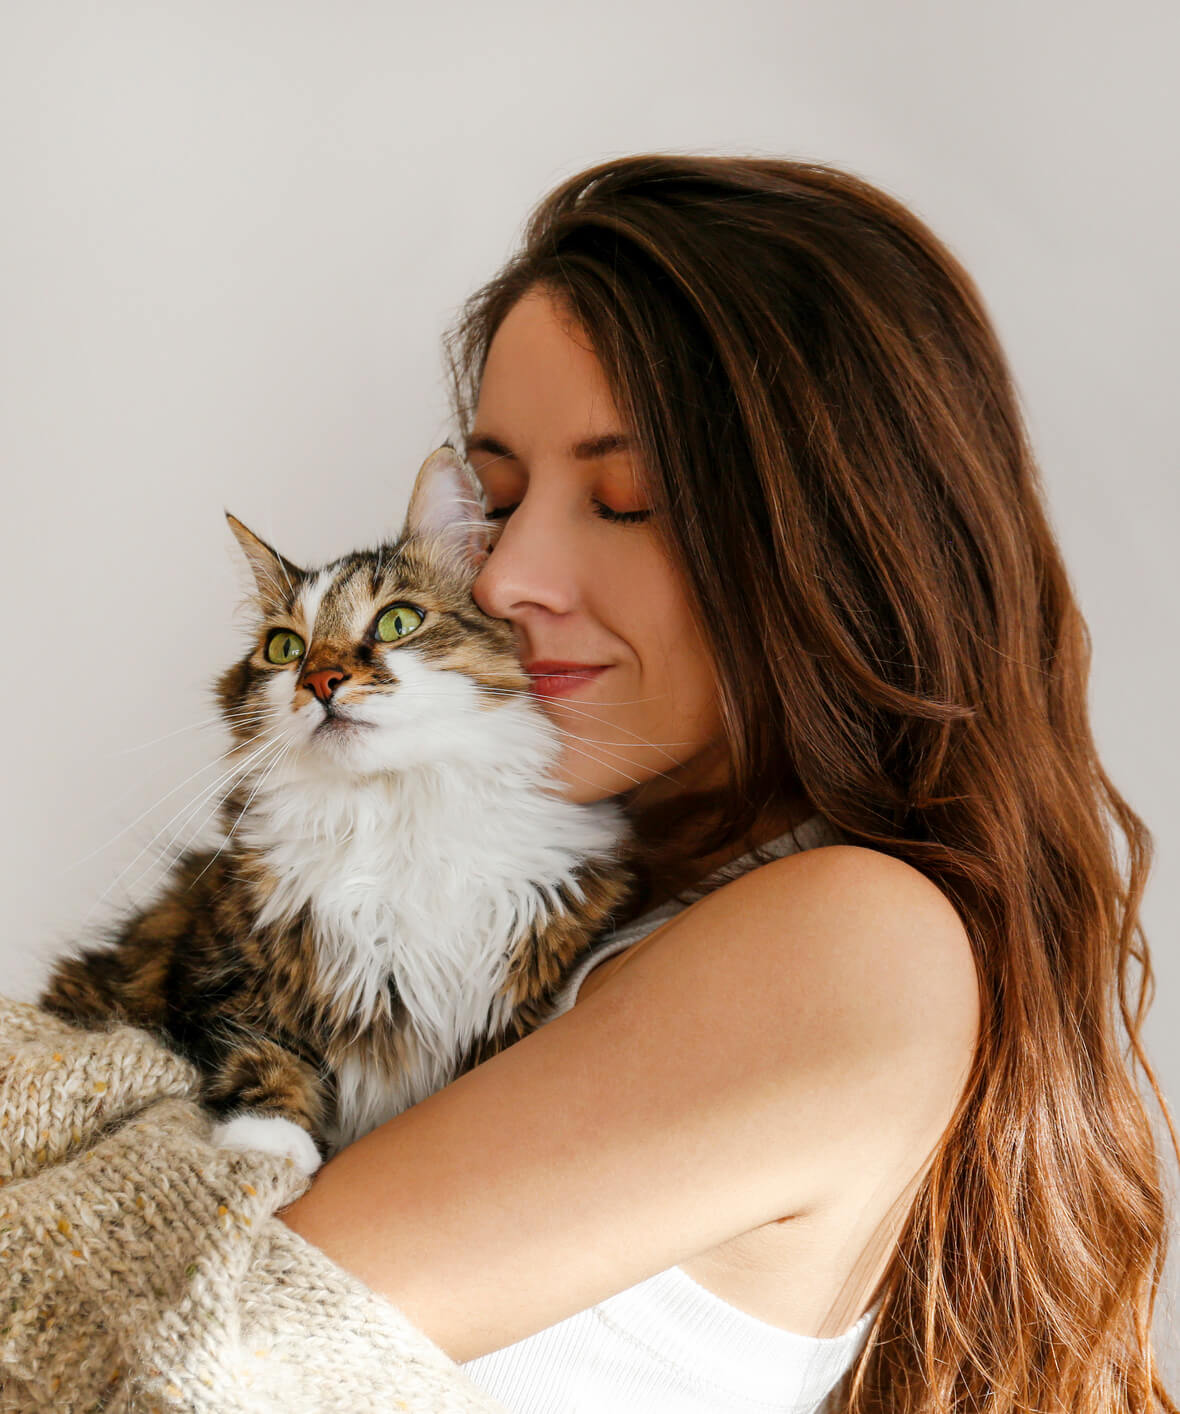 Woman Holding Cat Close